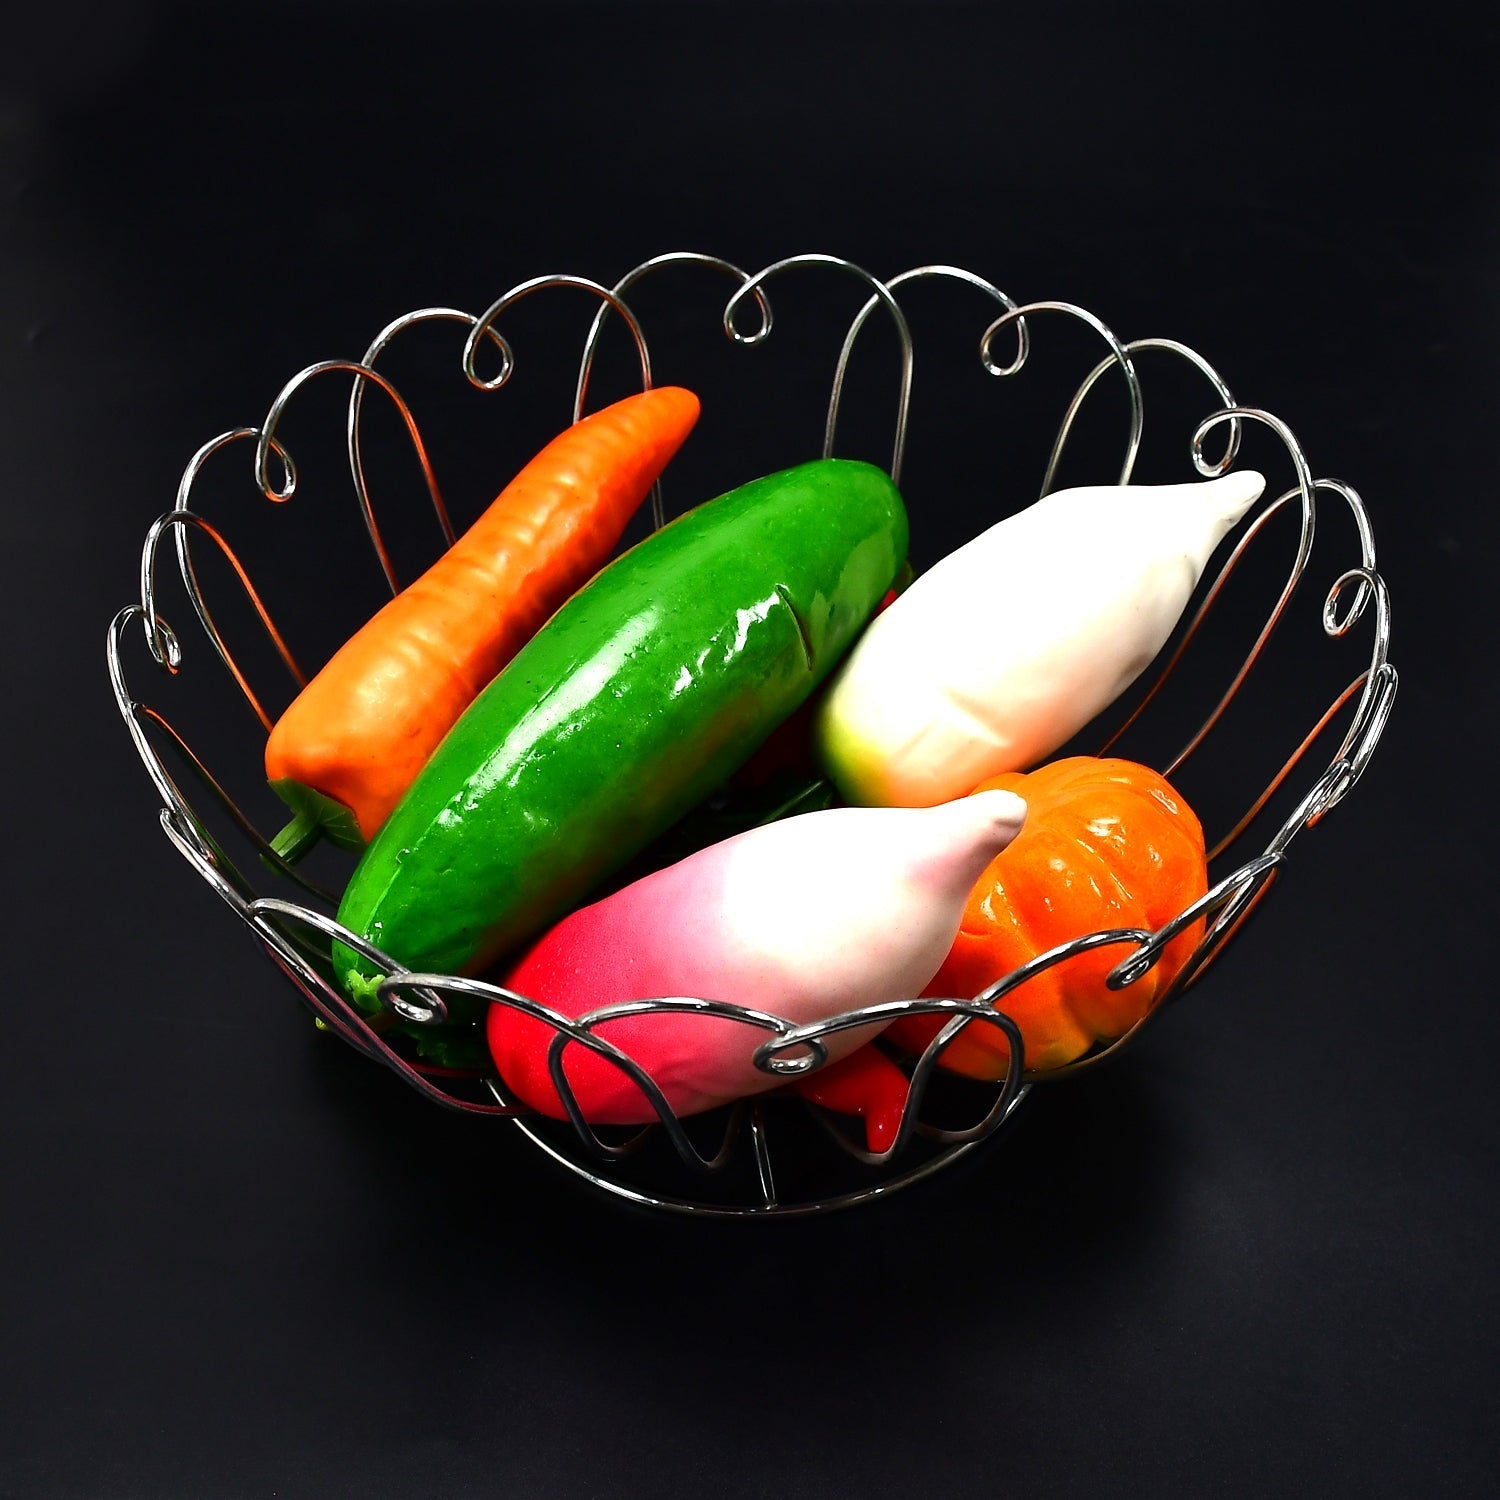 5198 Fruit & Multiuse Bowl  For  Kitchen & Home Use Bowl 25cm DeoDap